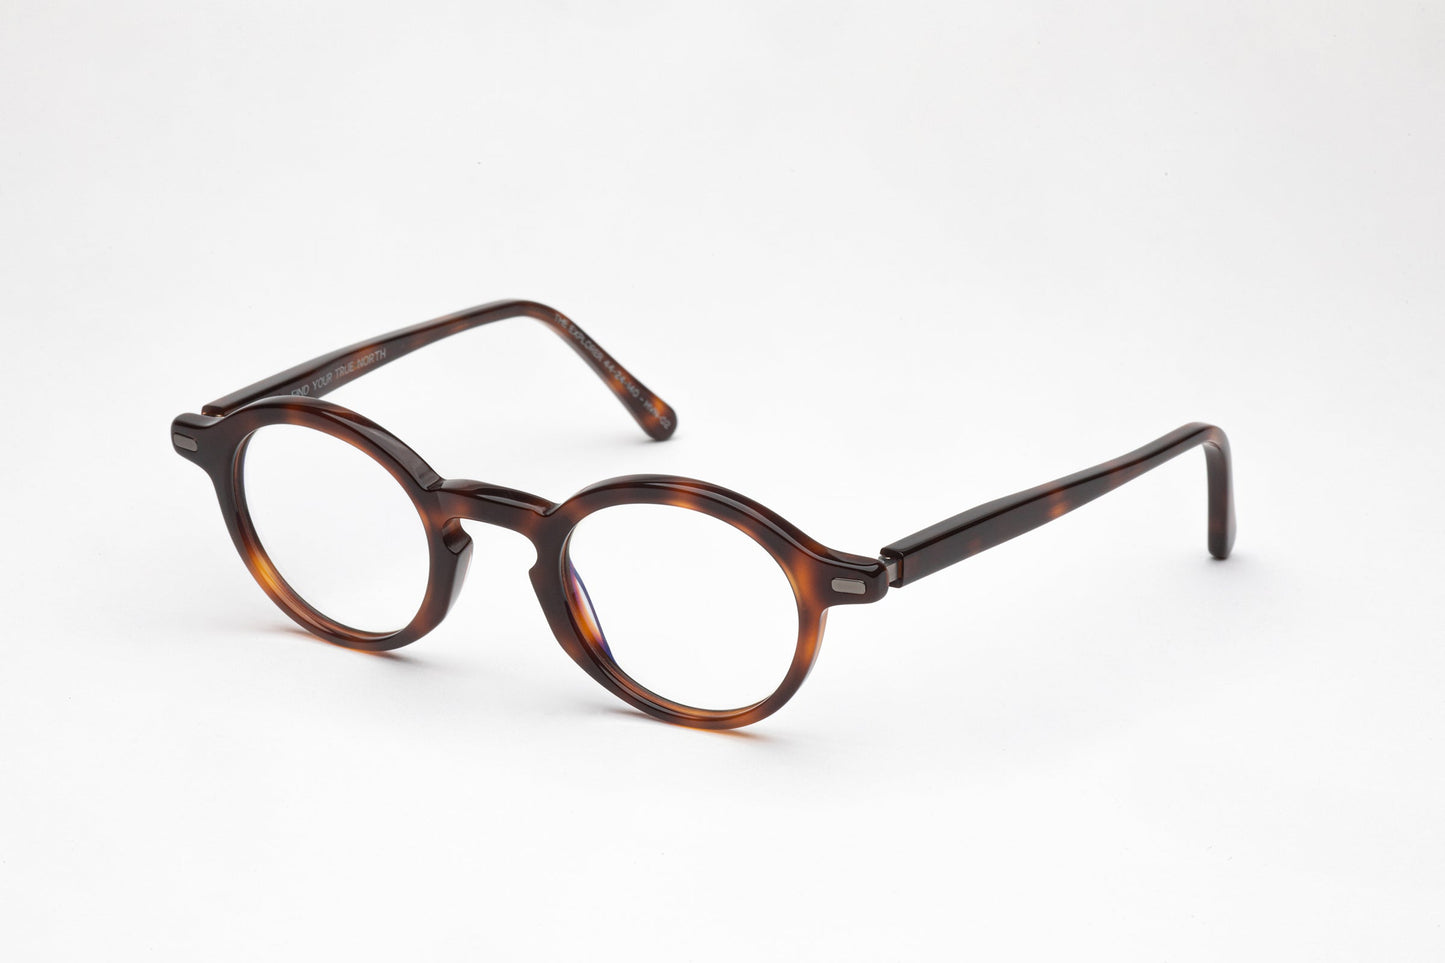 Angled View - The Explorer 3 | Designer Tortoiseshell Prescription Glasses with Low Nose Bridge 